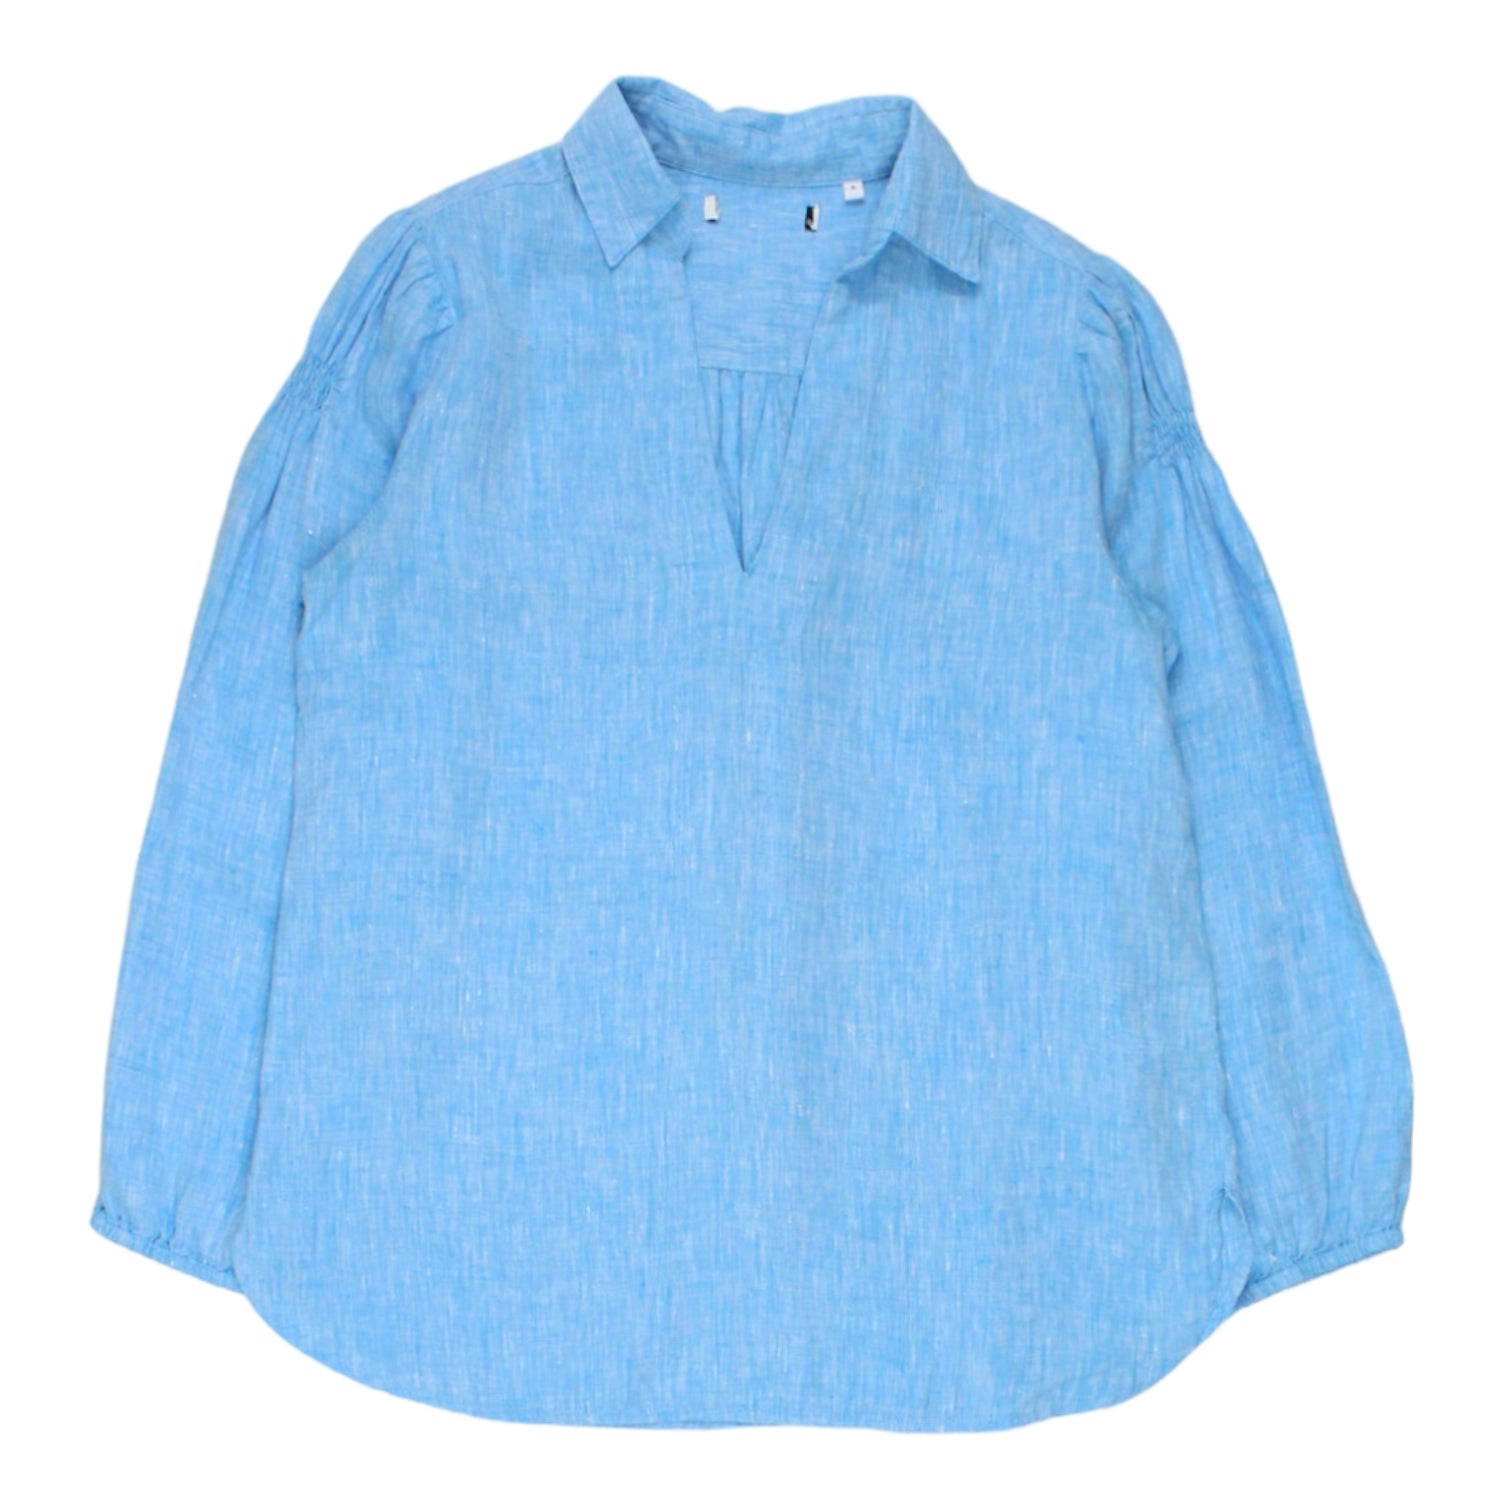 NRBY Blue Linen Shirt - Sample